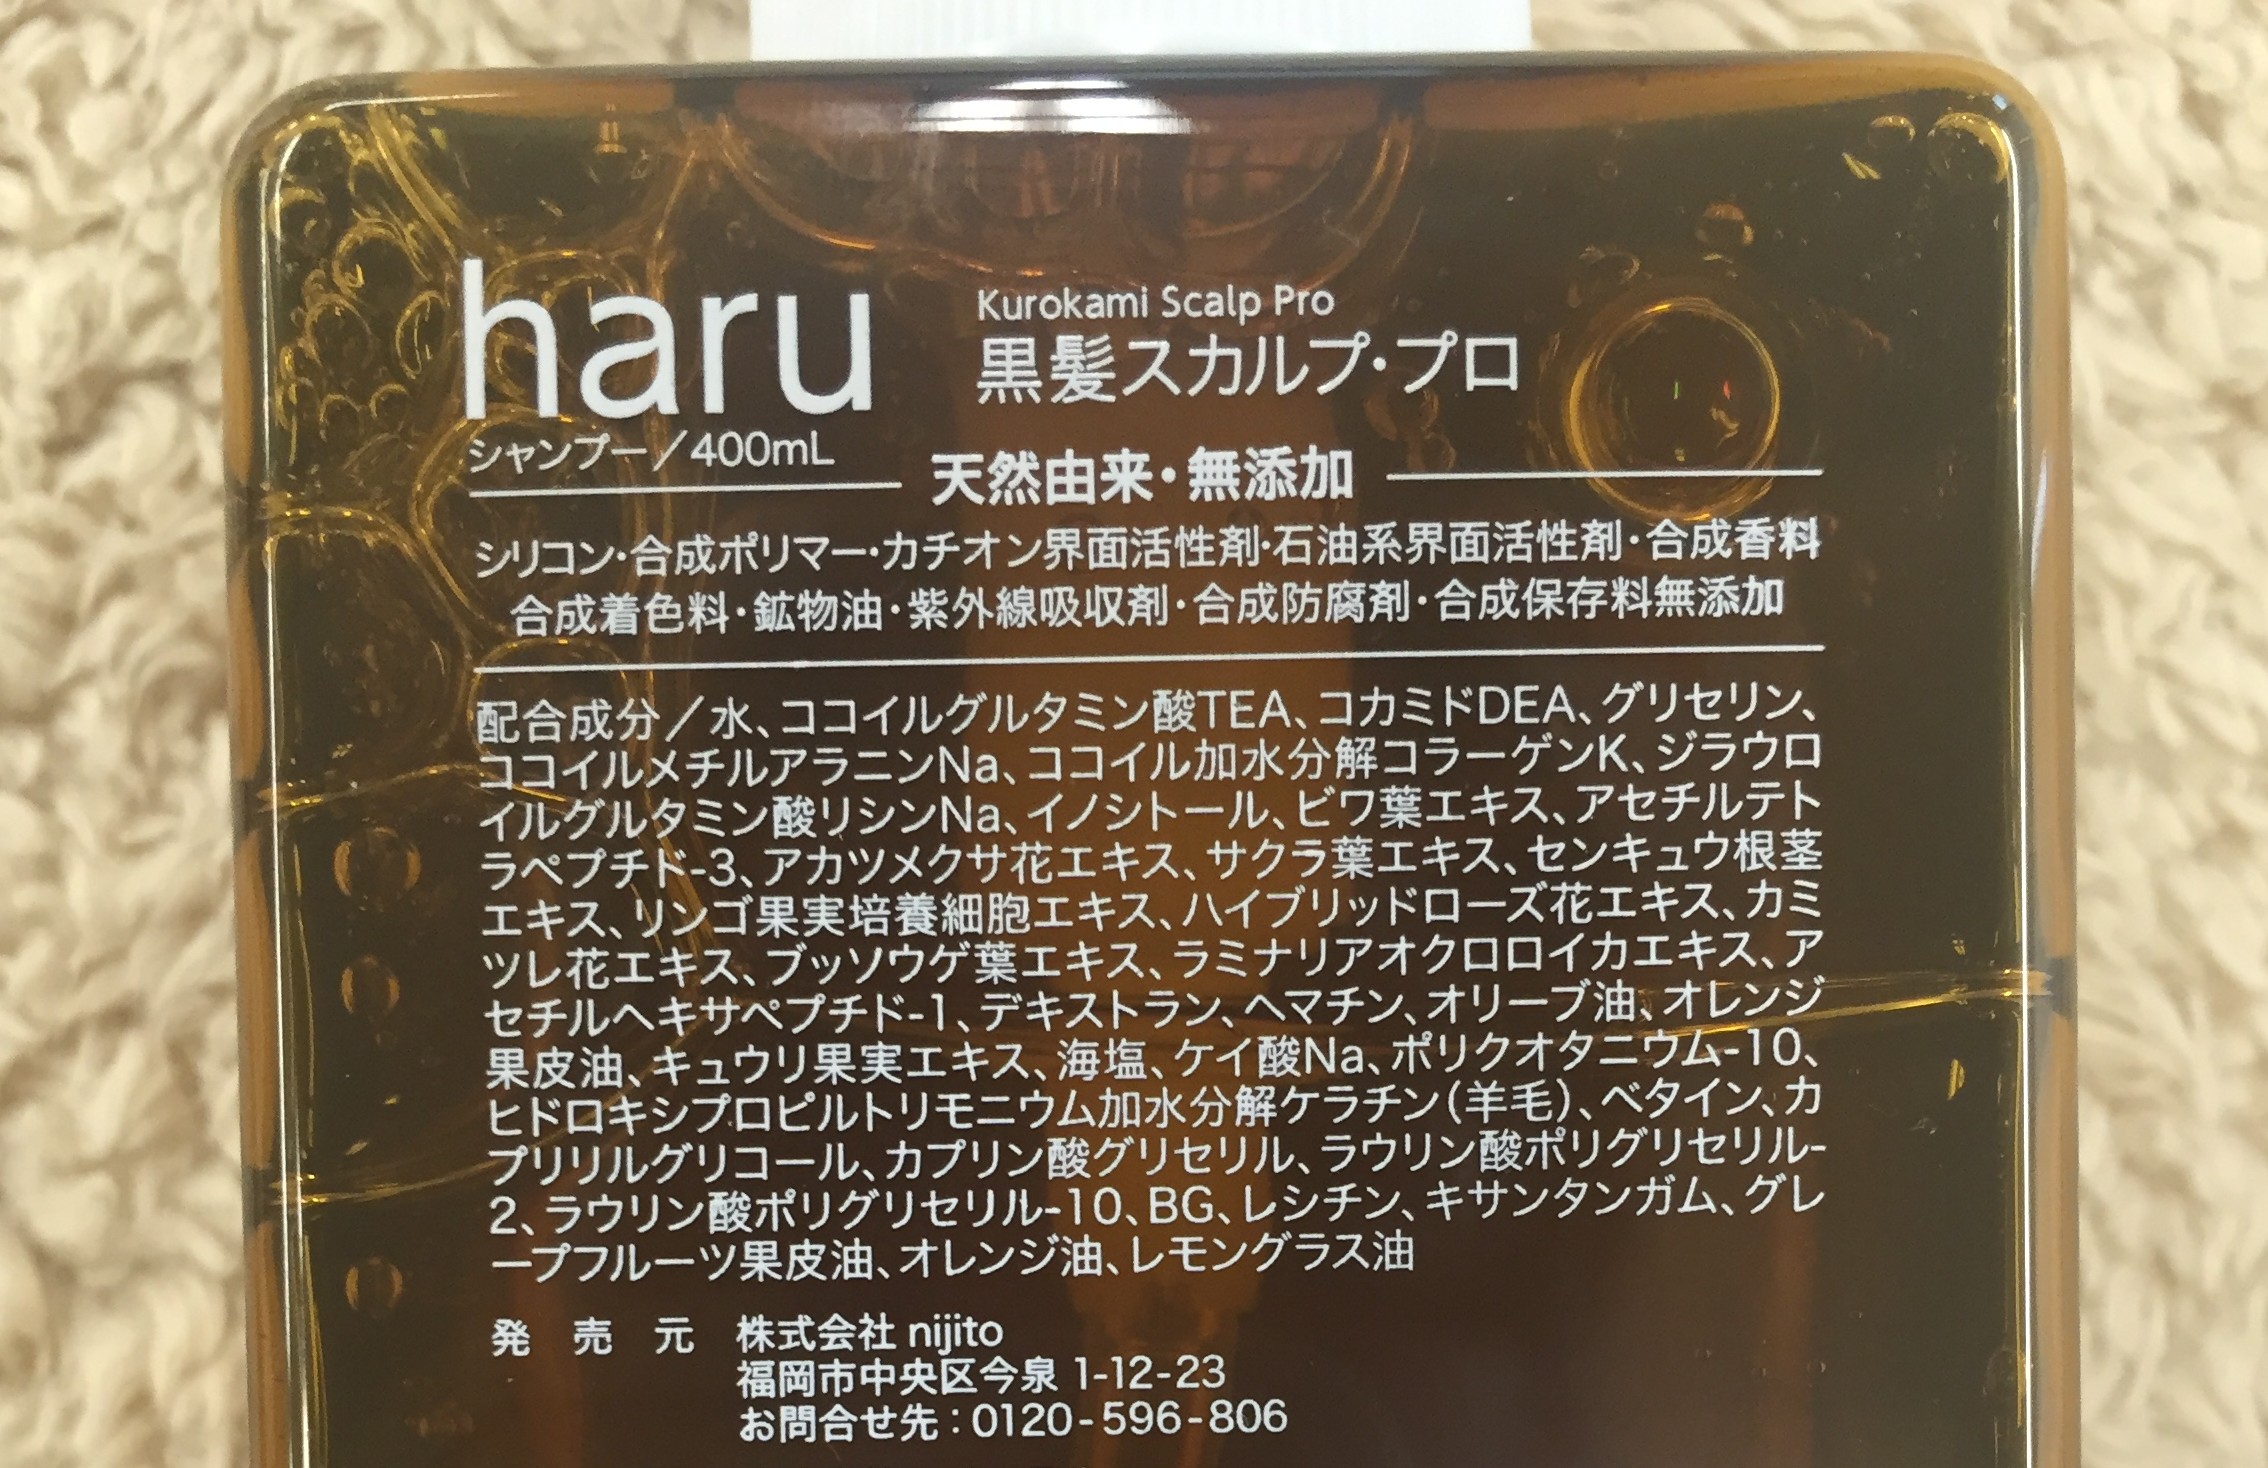 haru黒髪スカルプ・プロシャンプーの成分表示